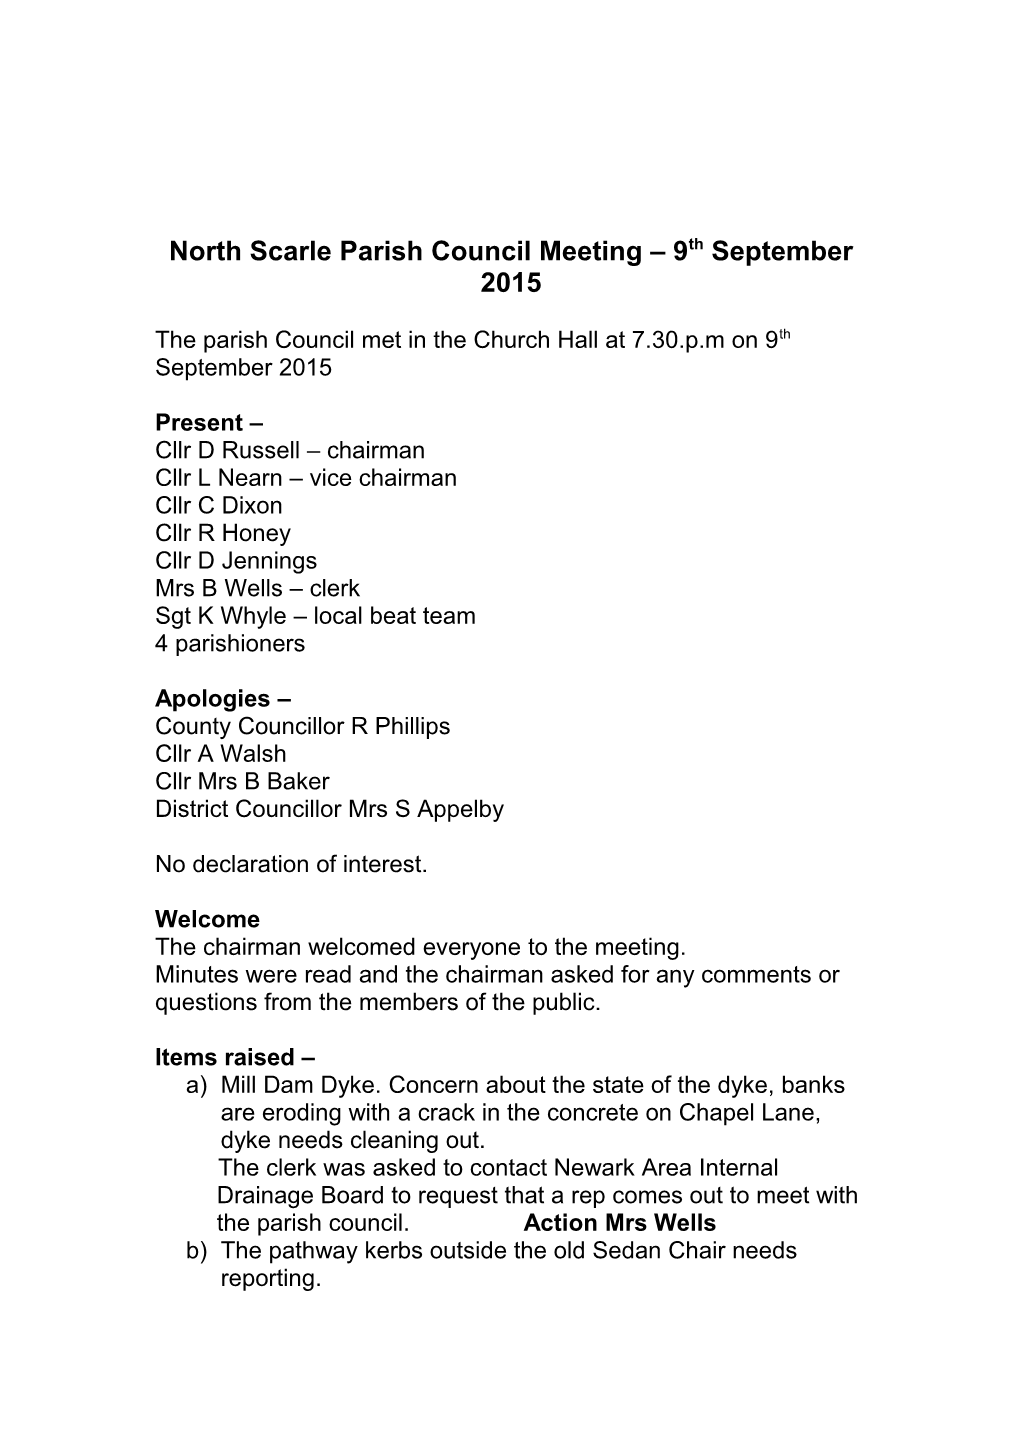 North Scarle Parish Council Meeting 9Th September 2015